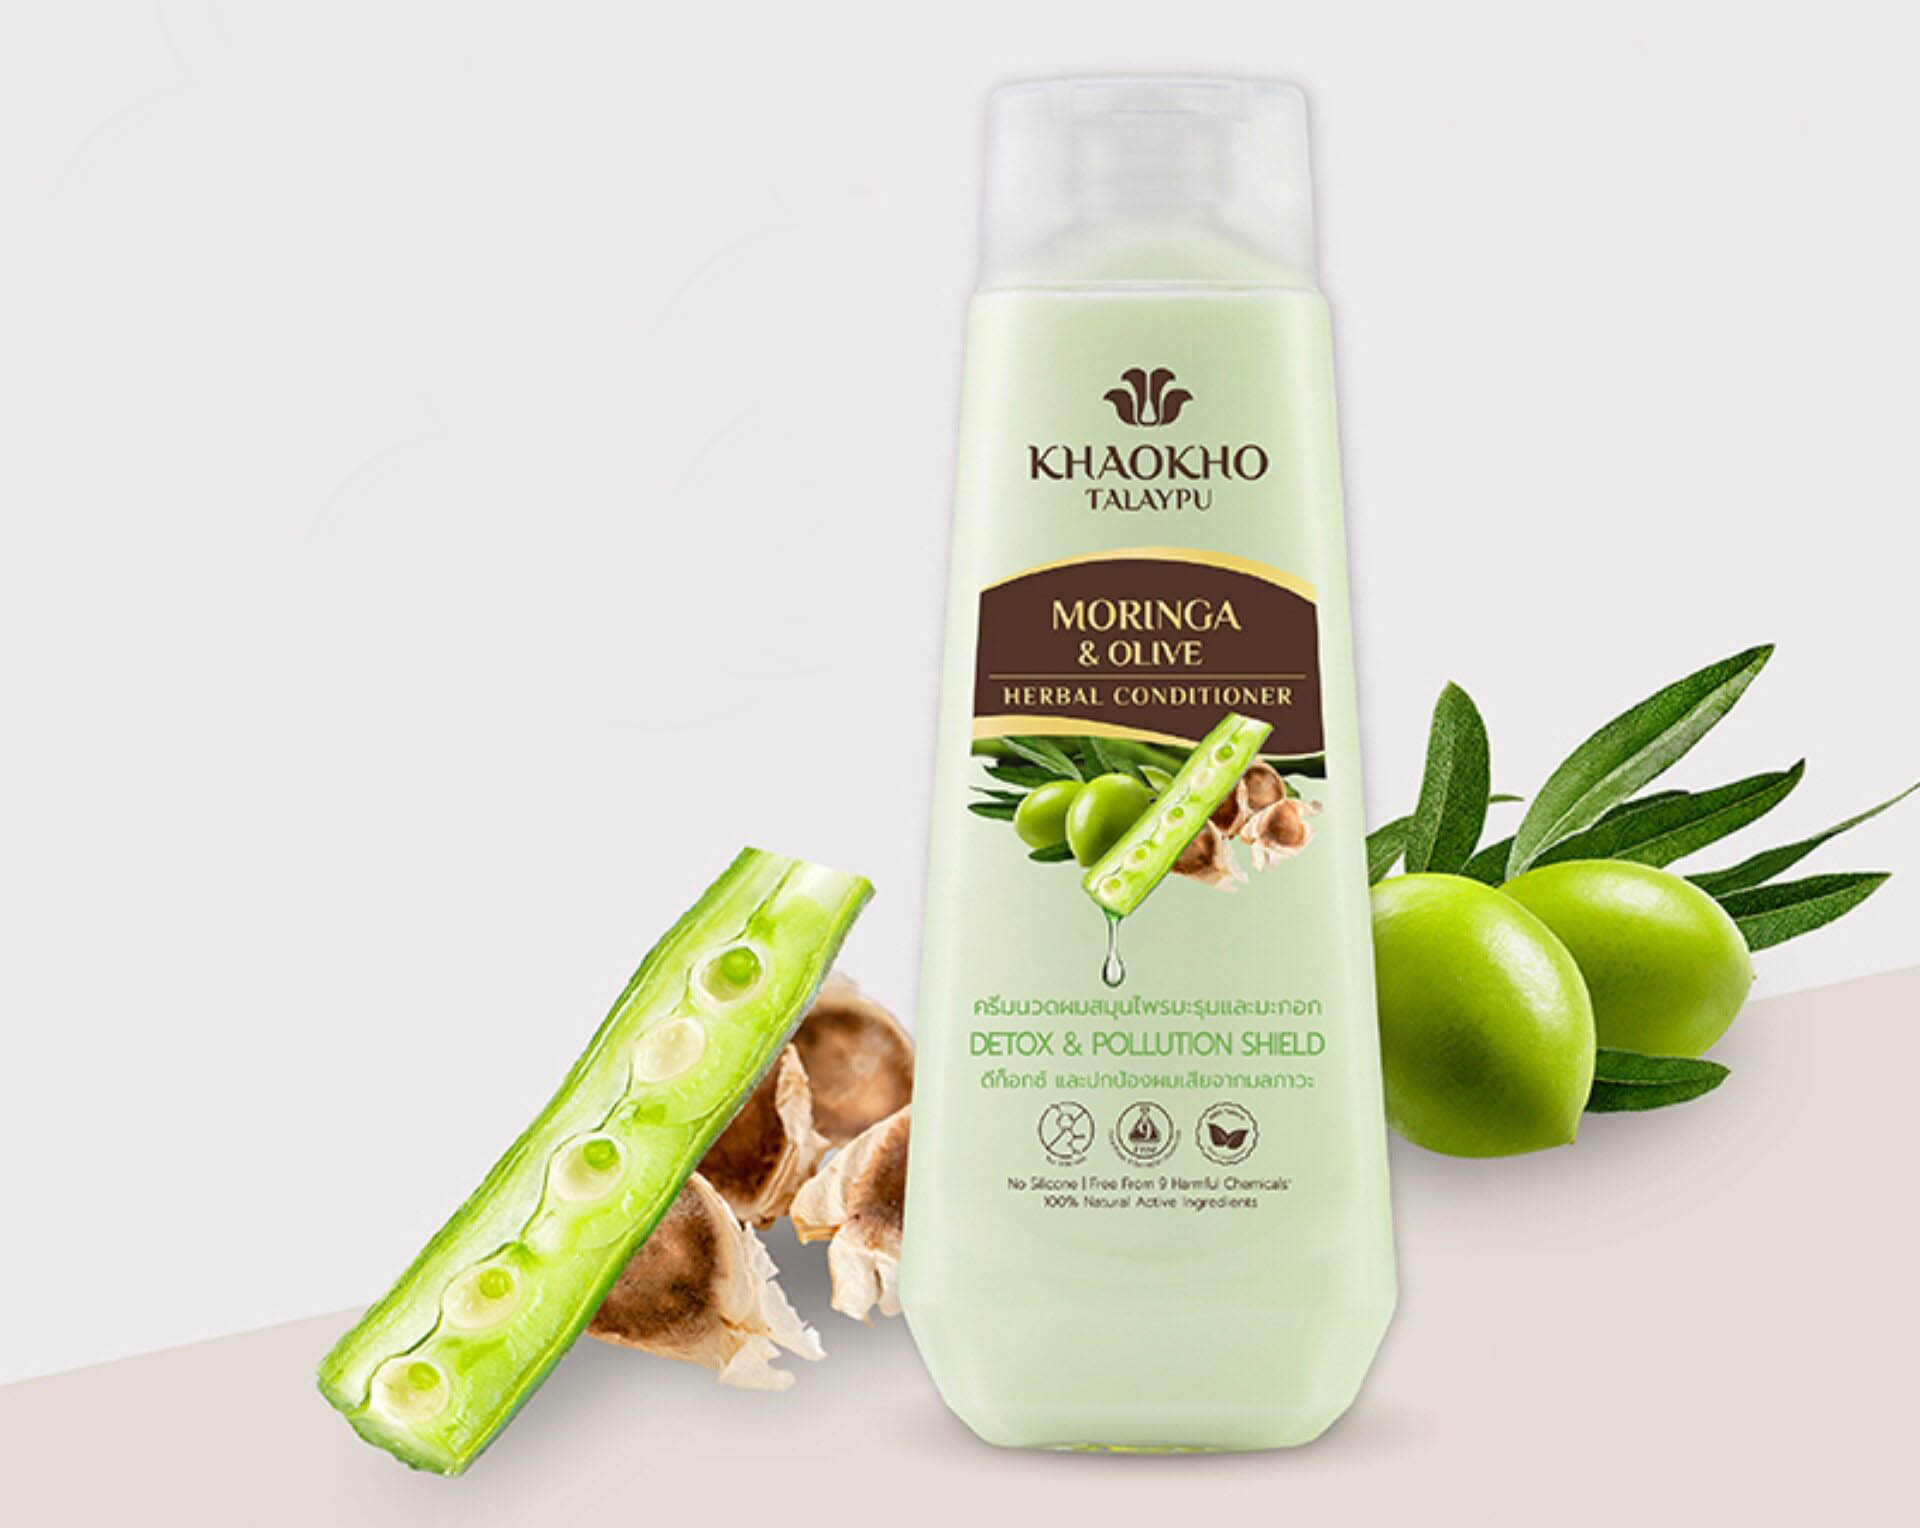 Khaokho Talaypu Moringa & Olive Herbal Conditioner 330ml